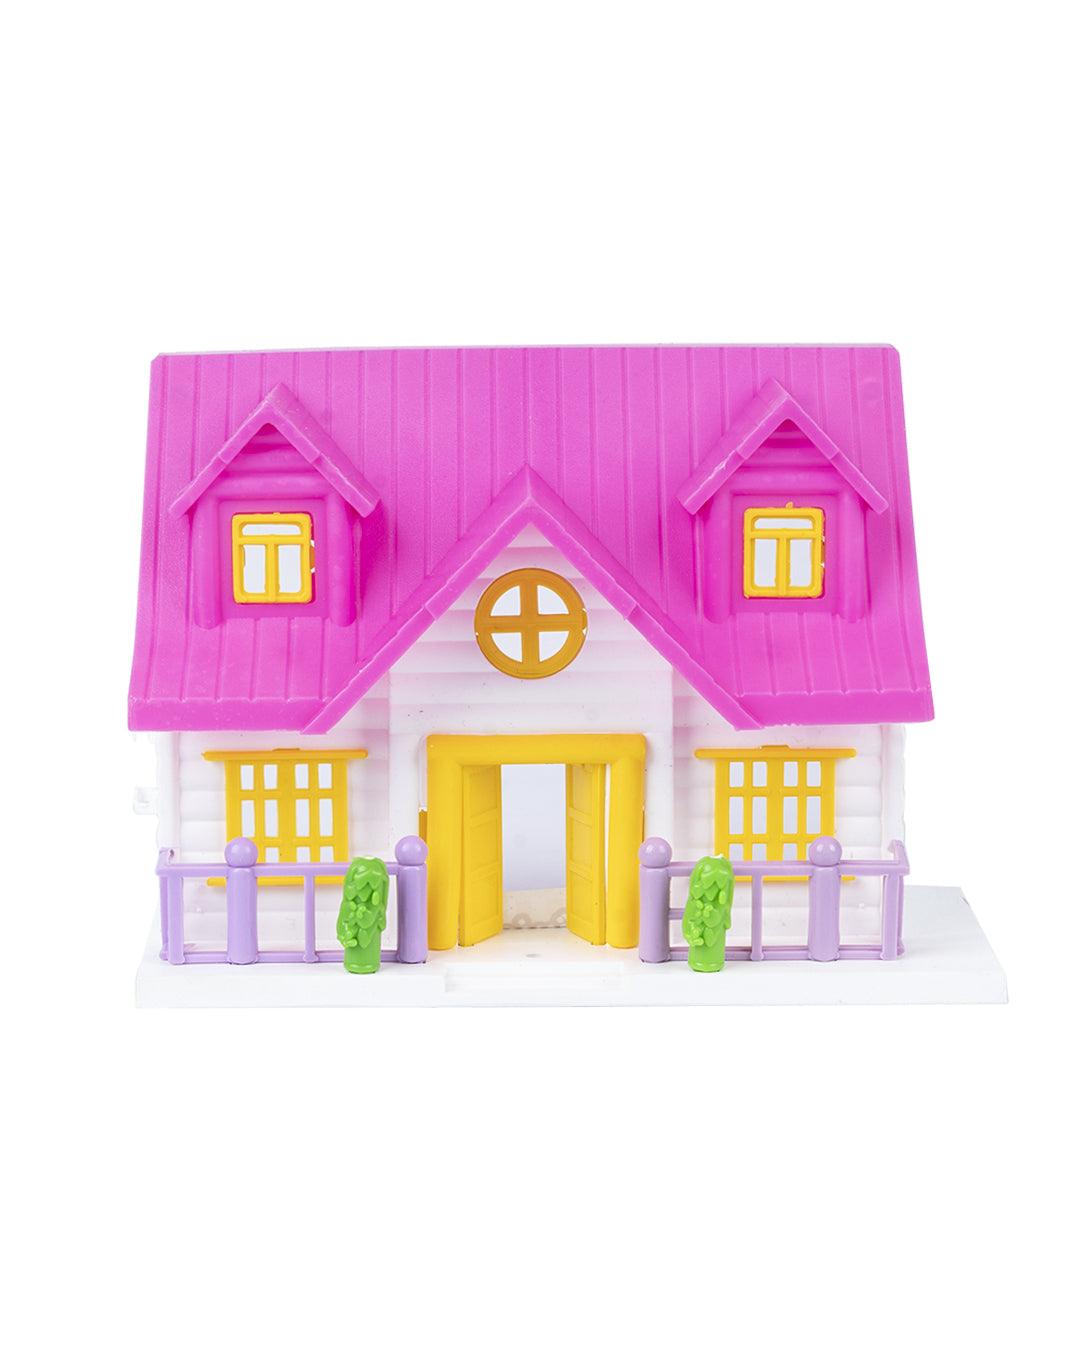 TOYTALES Toys Plastic Small Doll House Play Set - MARKET 99